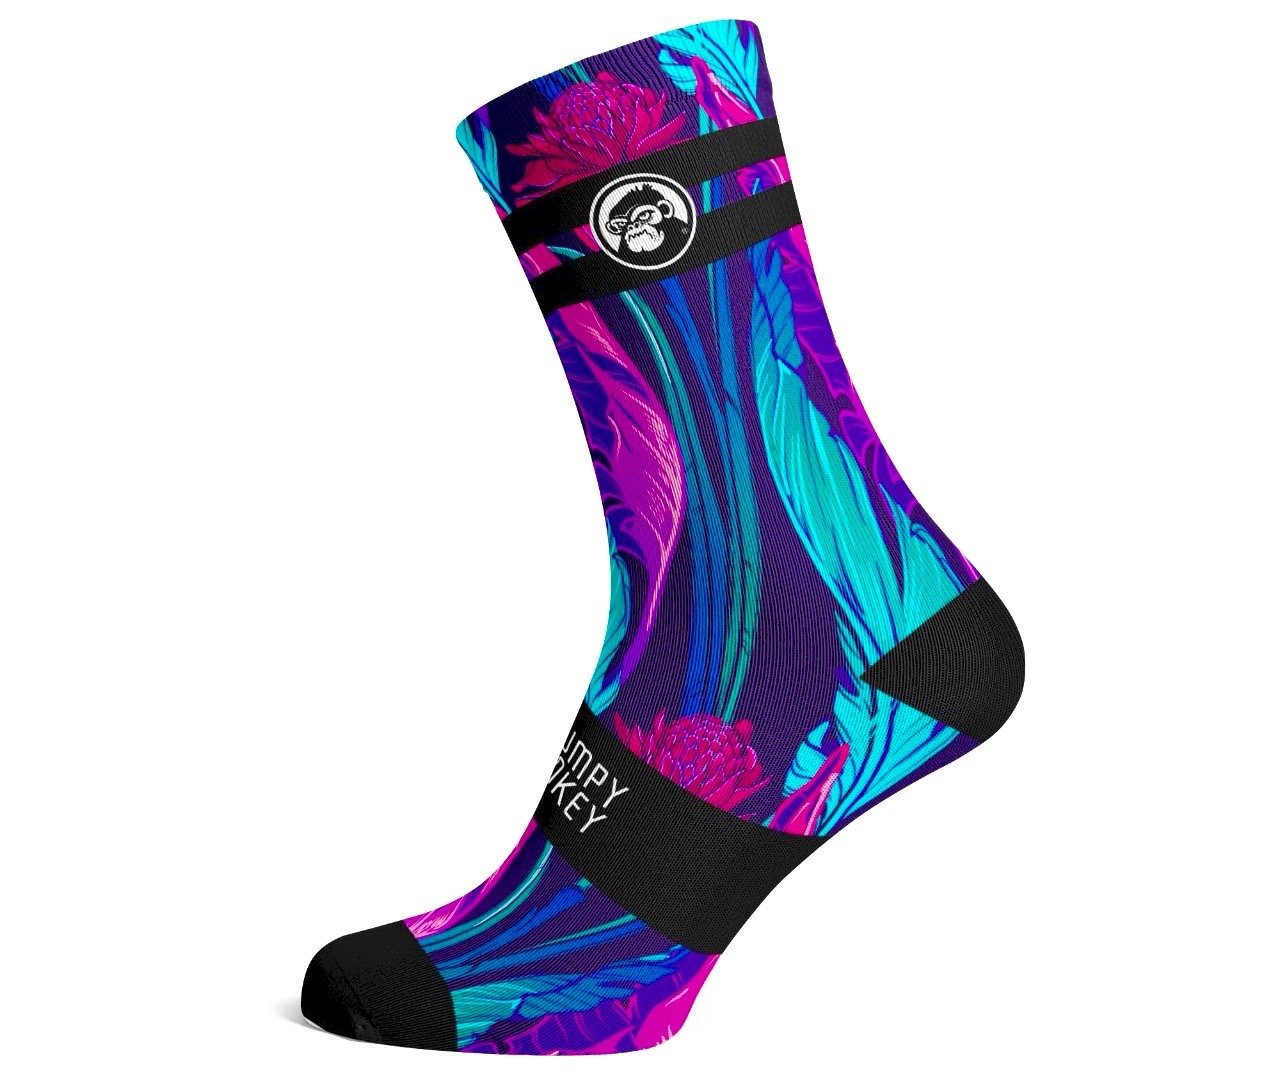 Grumpy Monkey Cycling Socks - Premium Prints - Ultra Violet